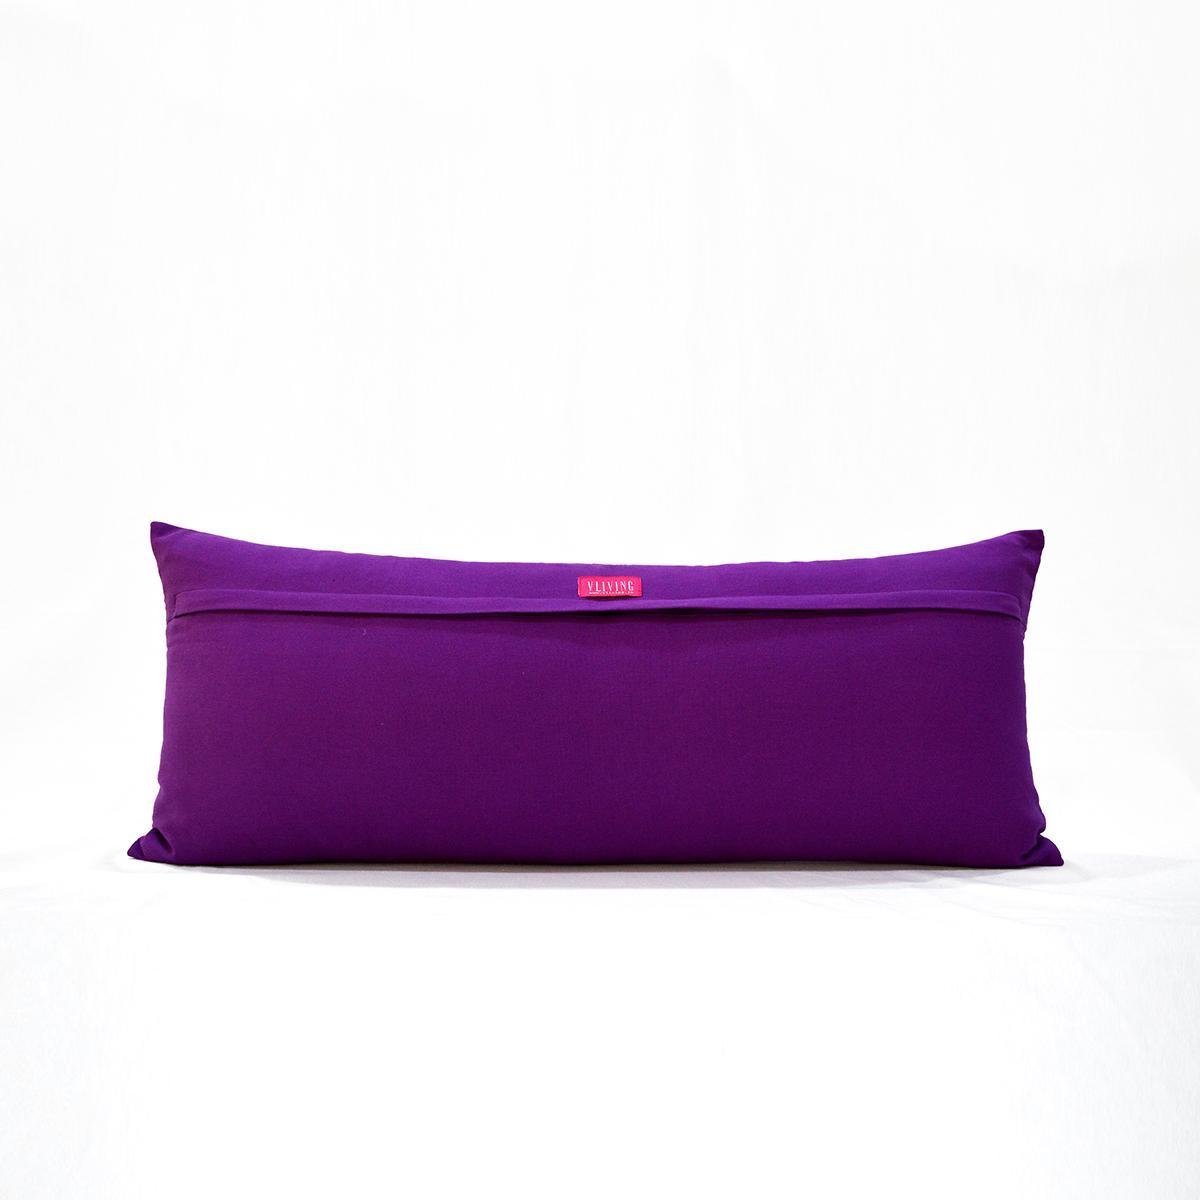 KASHIDAKAARI - Plum cotton long lumbar pillow cover with modern retro pattern embroidery, sizes available